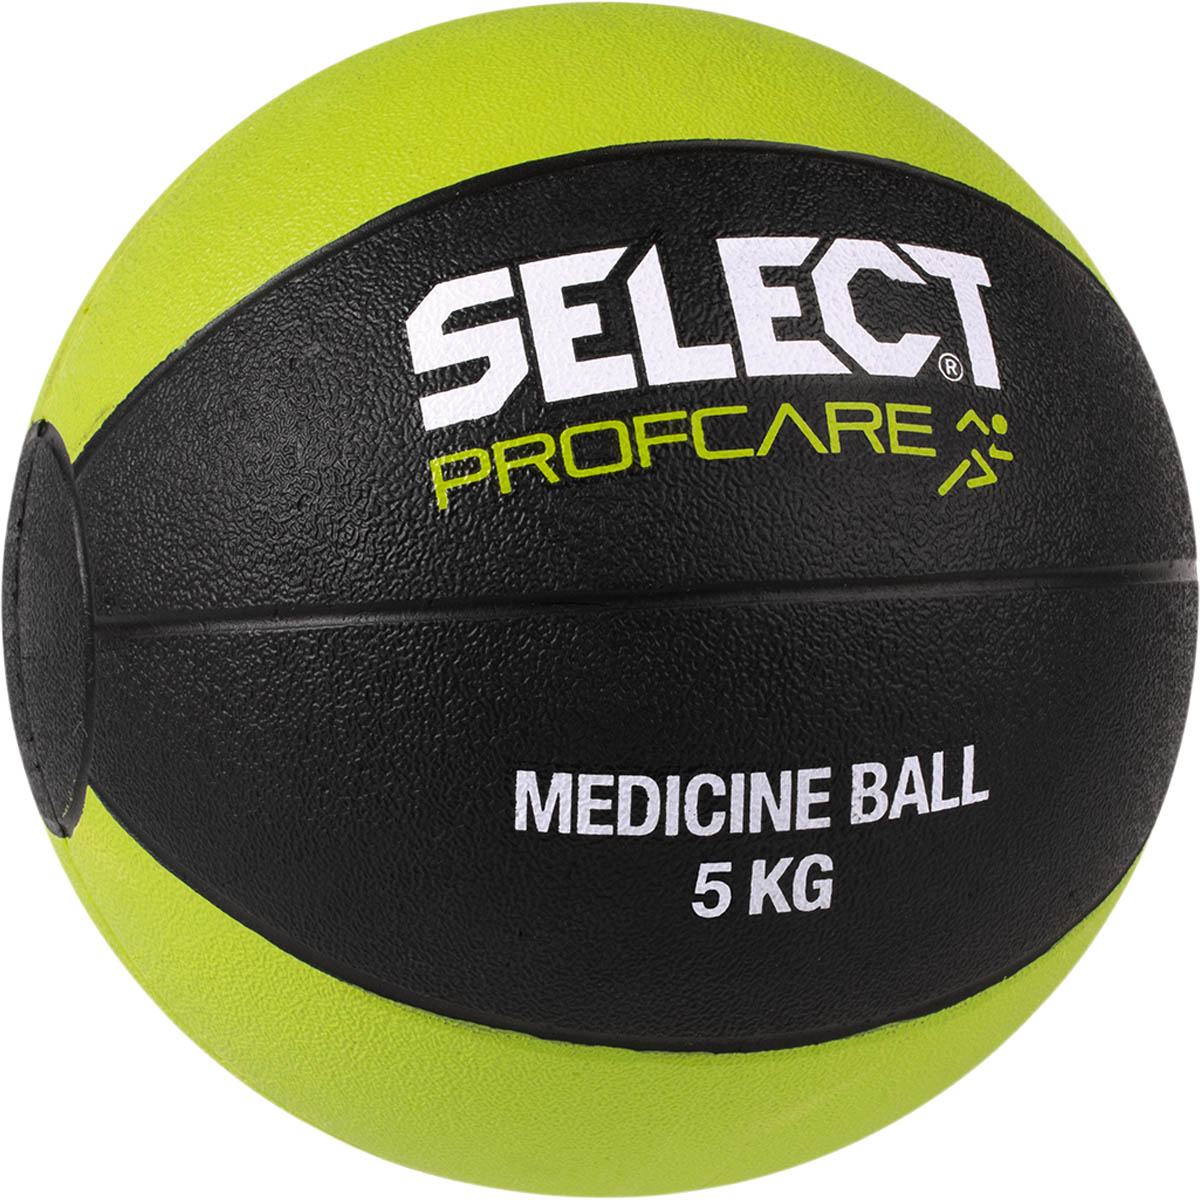 Select  Medicine ball